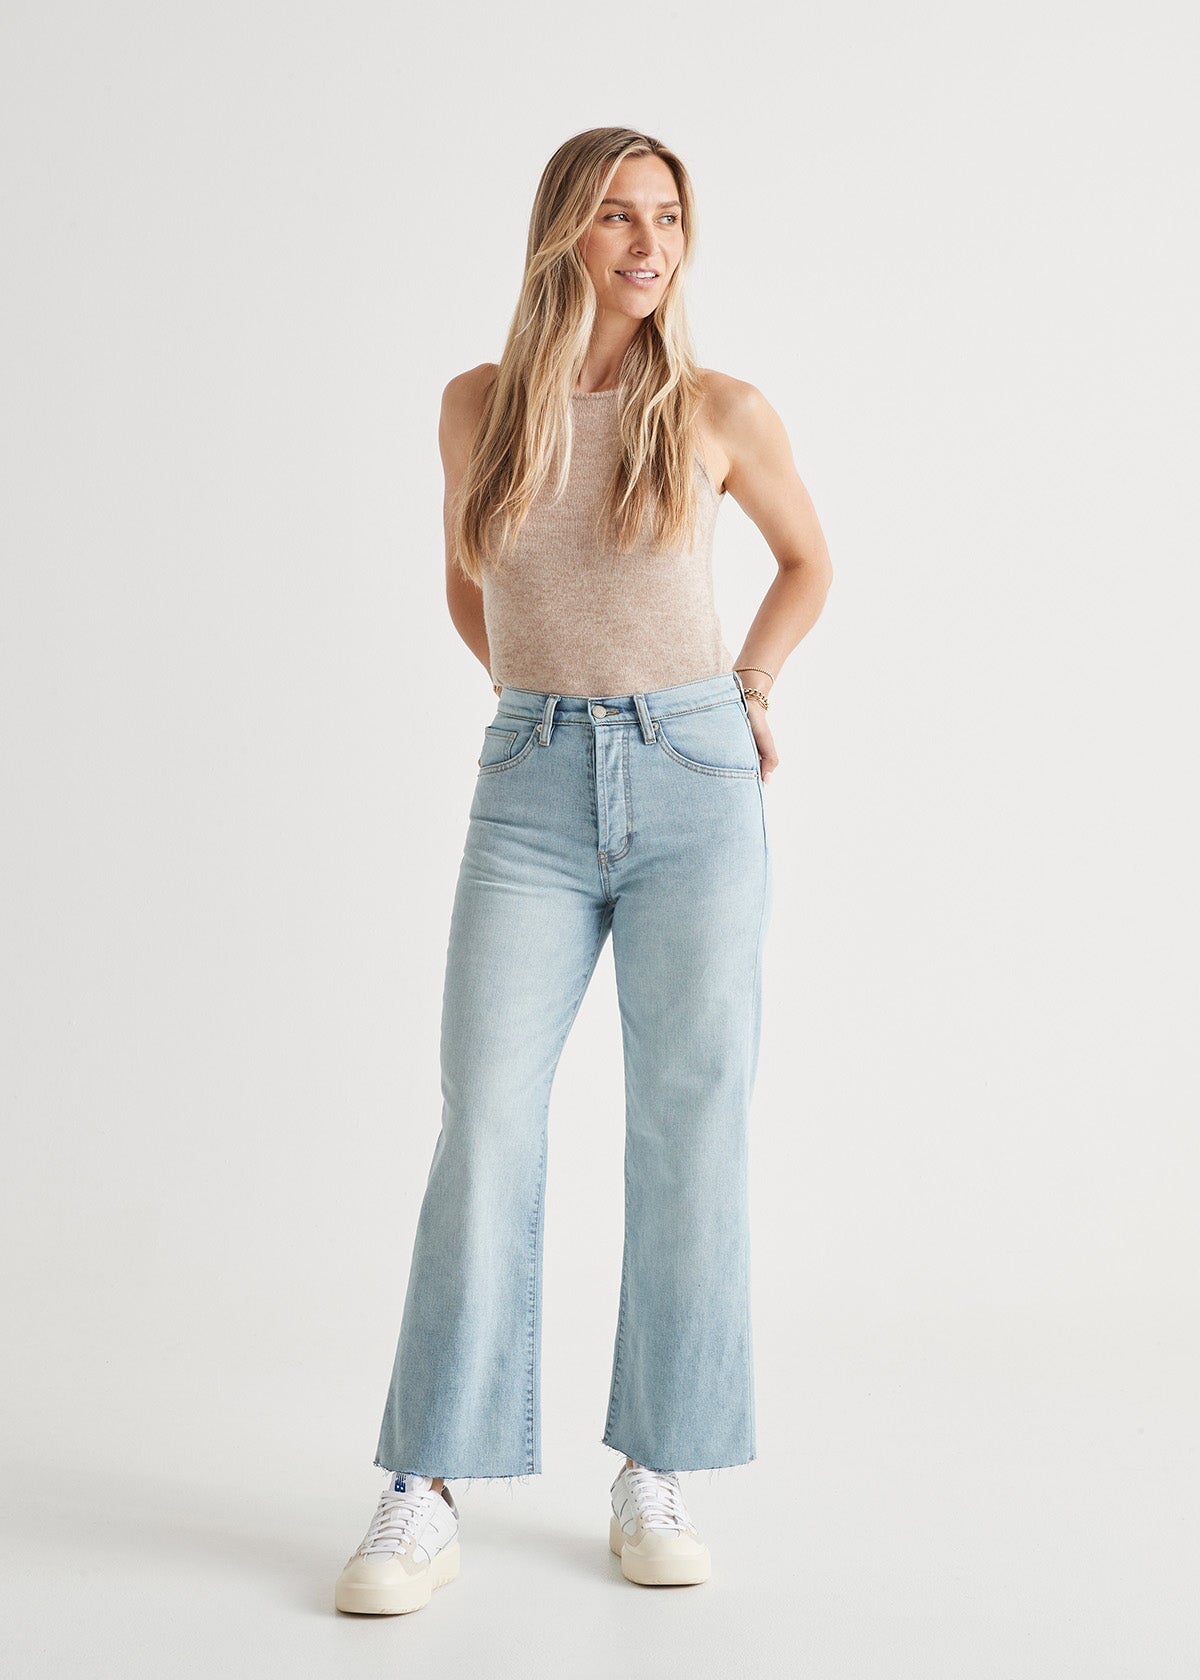 Women's Blue High Rise Elastic Waist Flare Jeans